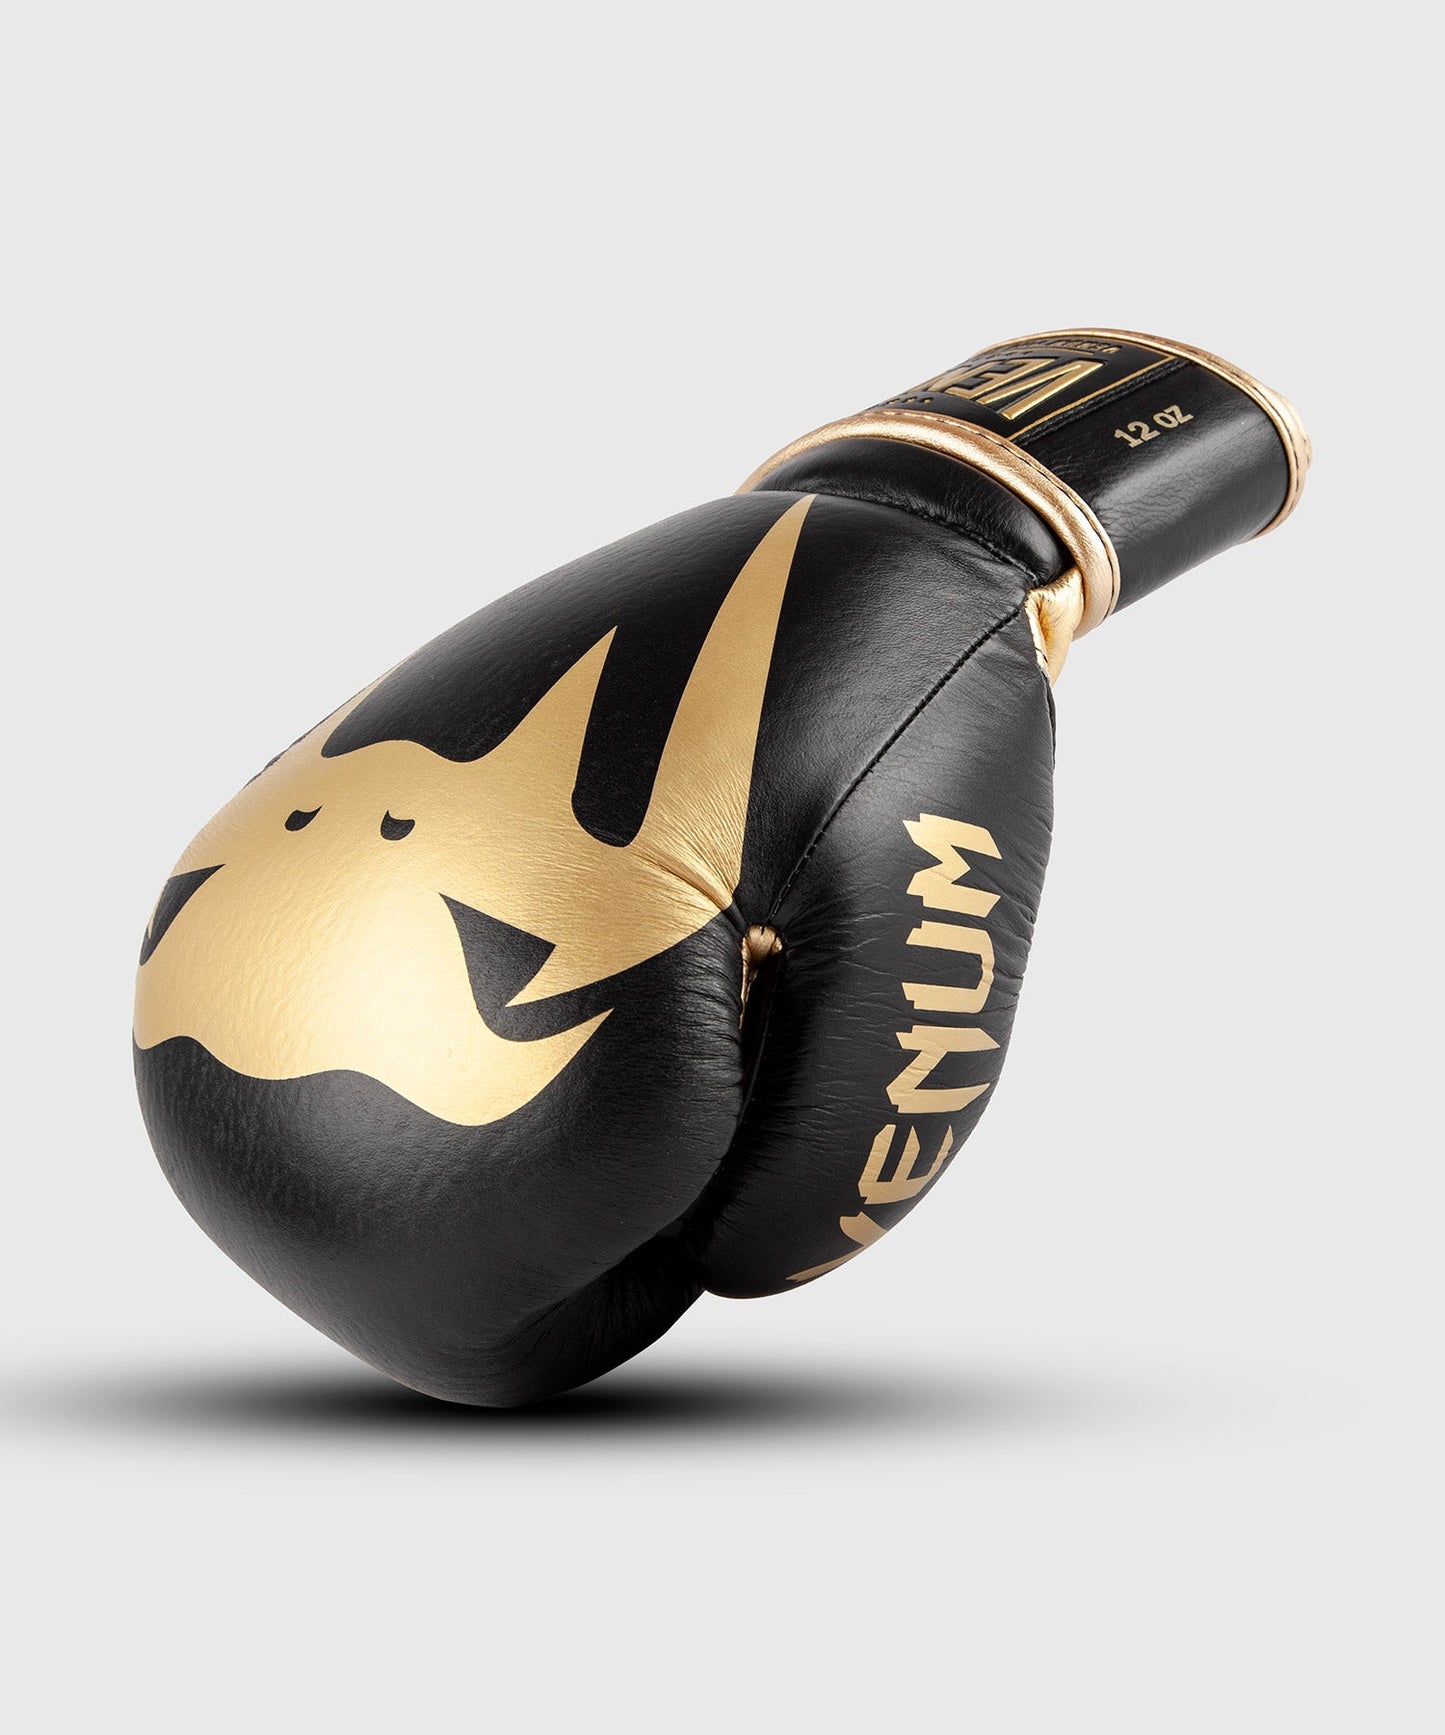 Venum Giant 2.0 Pro Boxing Gloves Velcro - Black/Gold